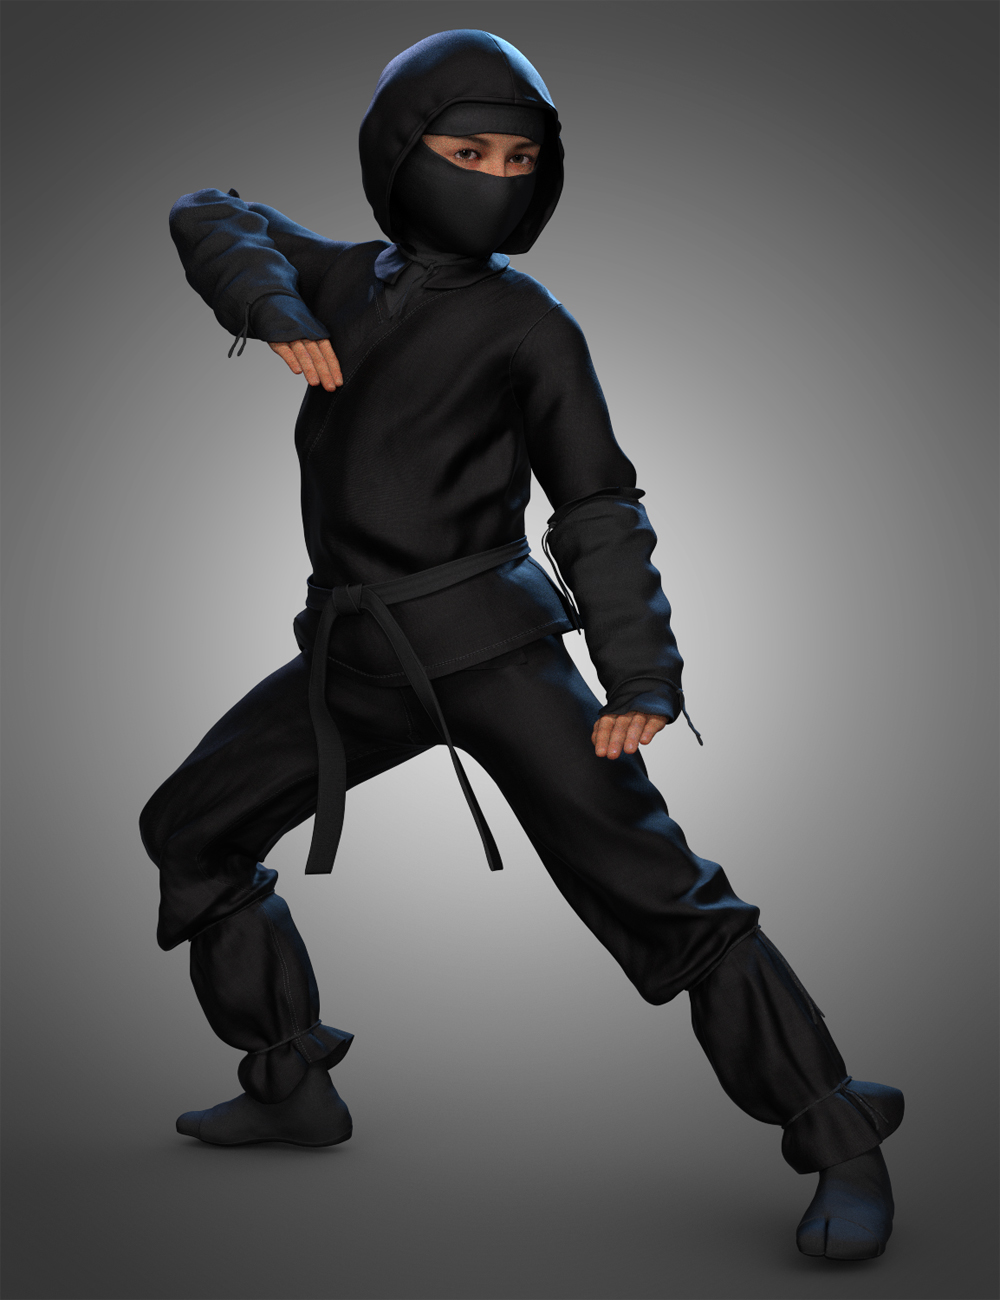 Ninja Kid Outfit for Genesis 8.1 Males by: Barbara BrundonUmblefuglySade, 3D Models by Daz 3D